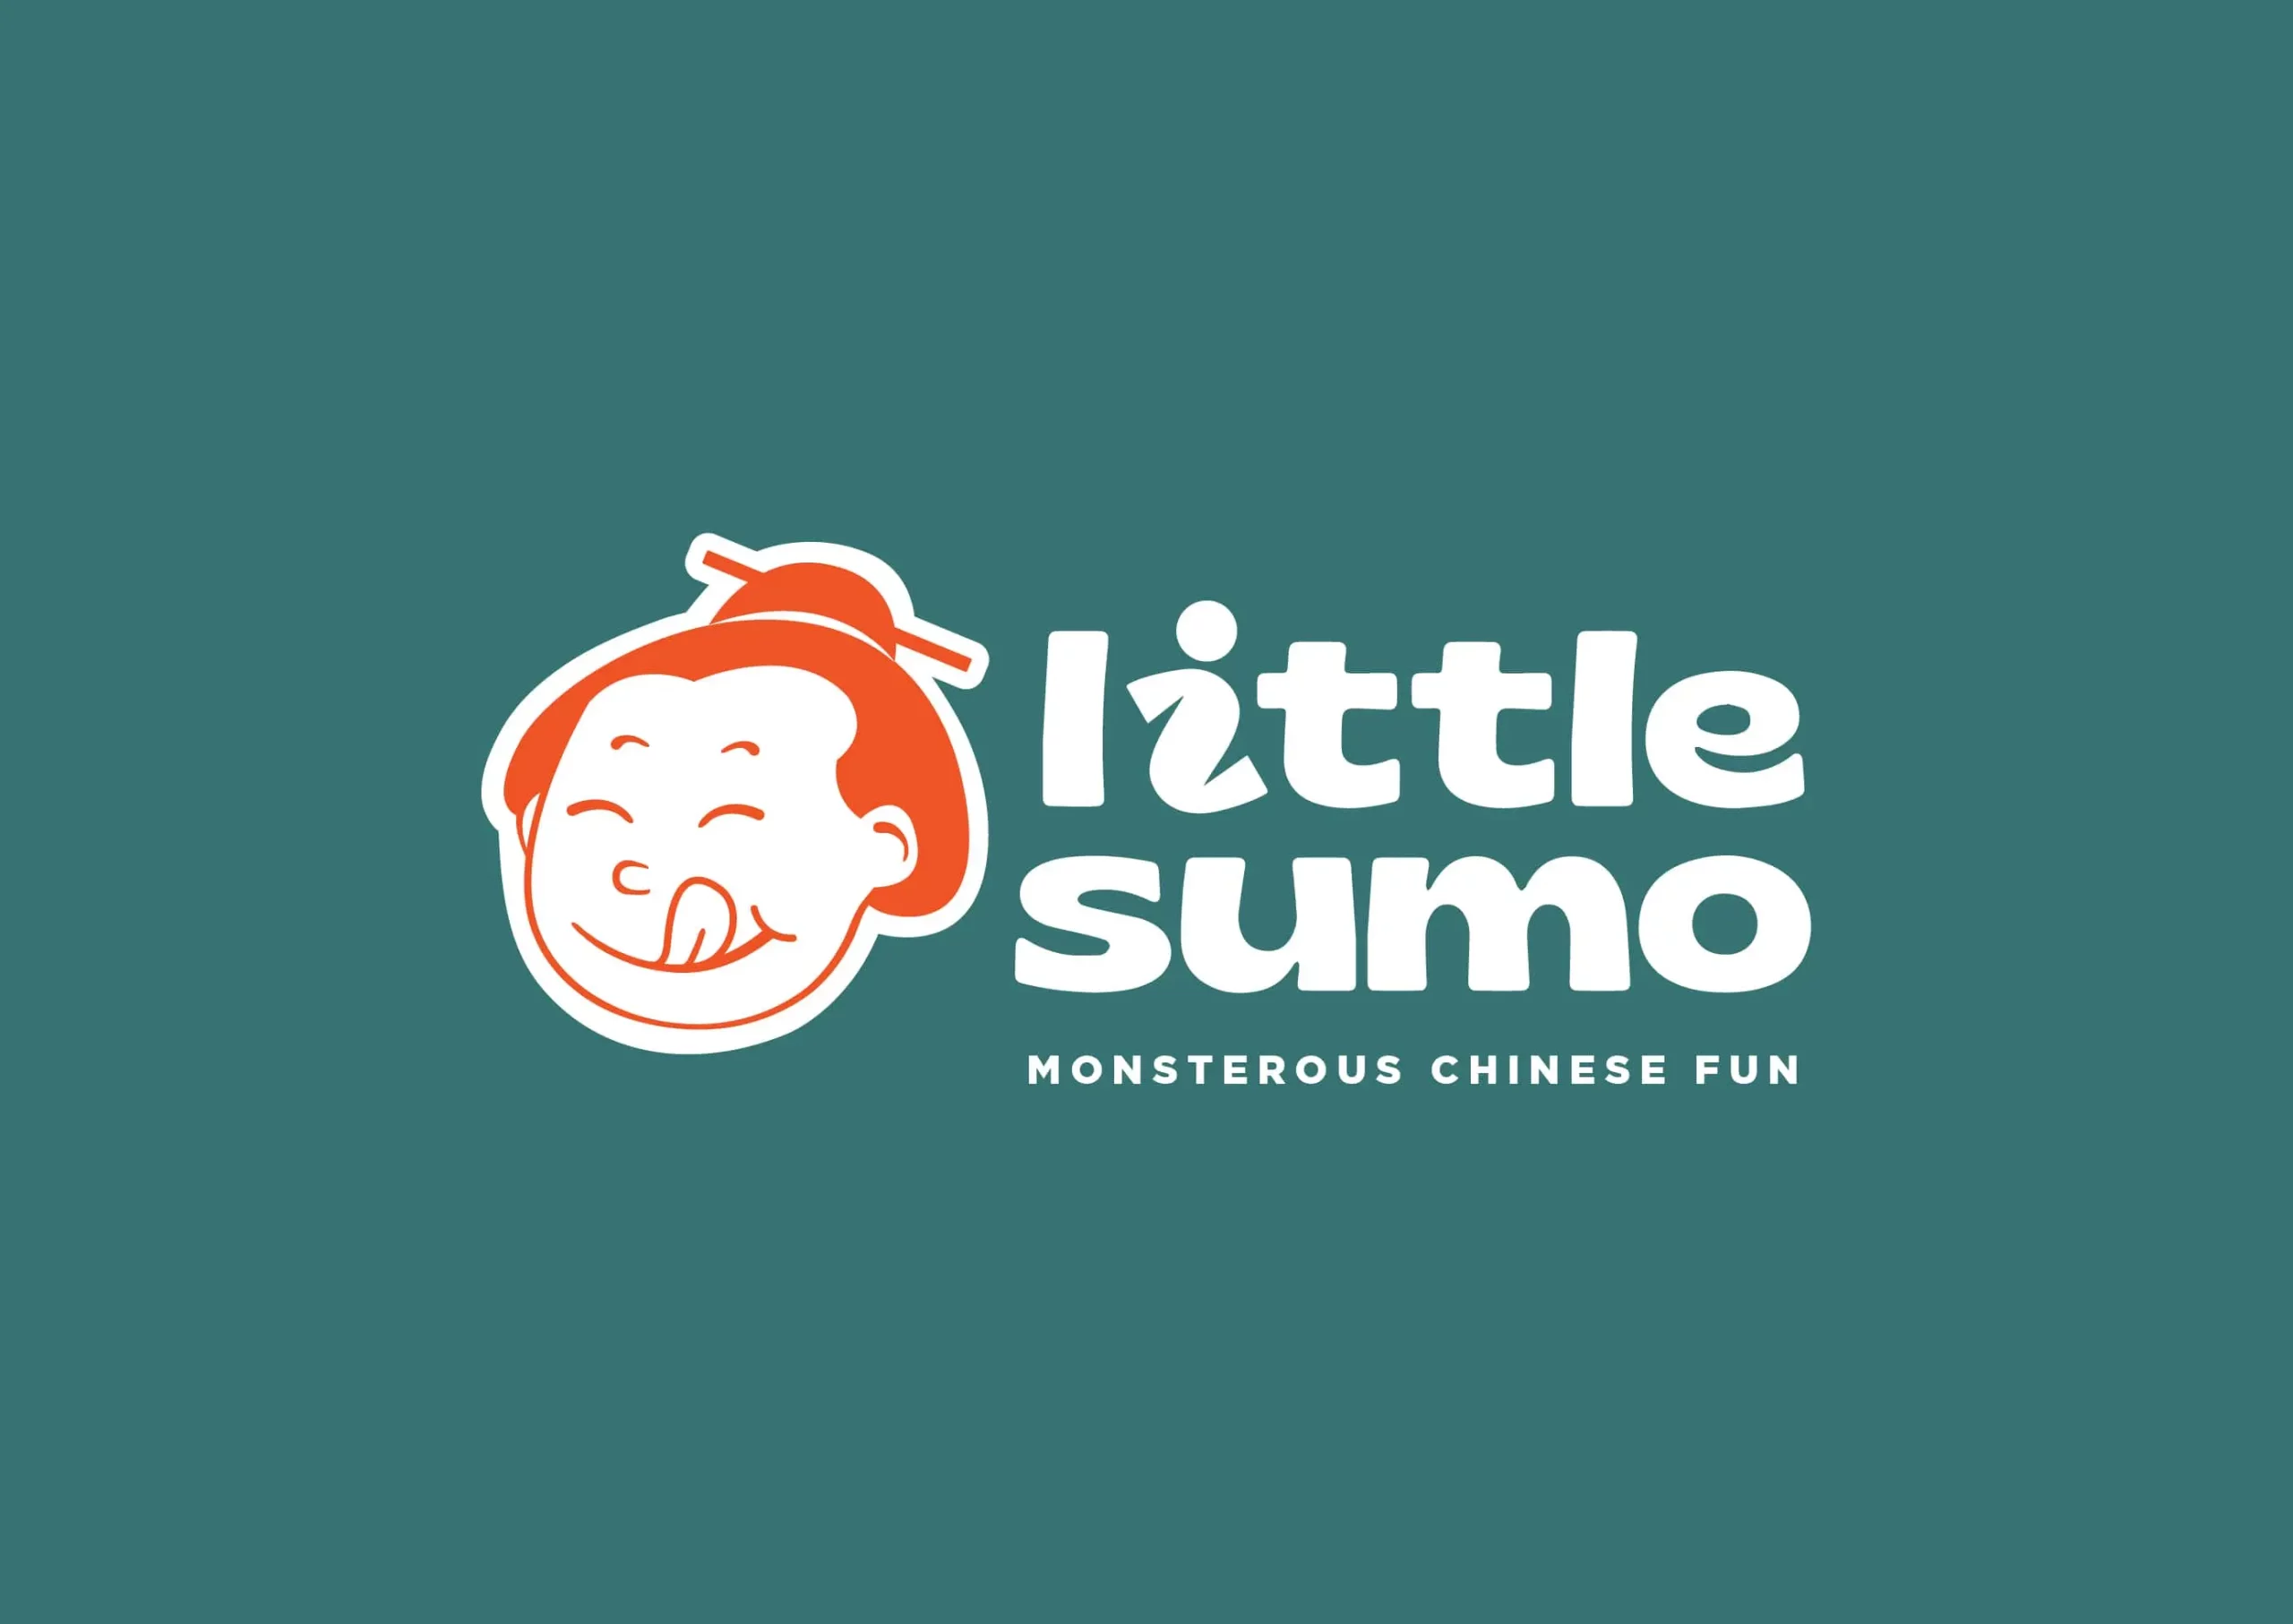 Little sumo monsterous chinese fun logo.